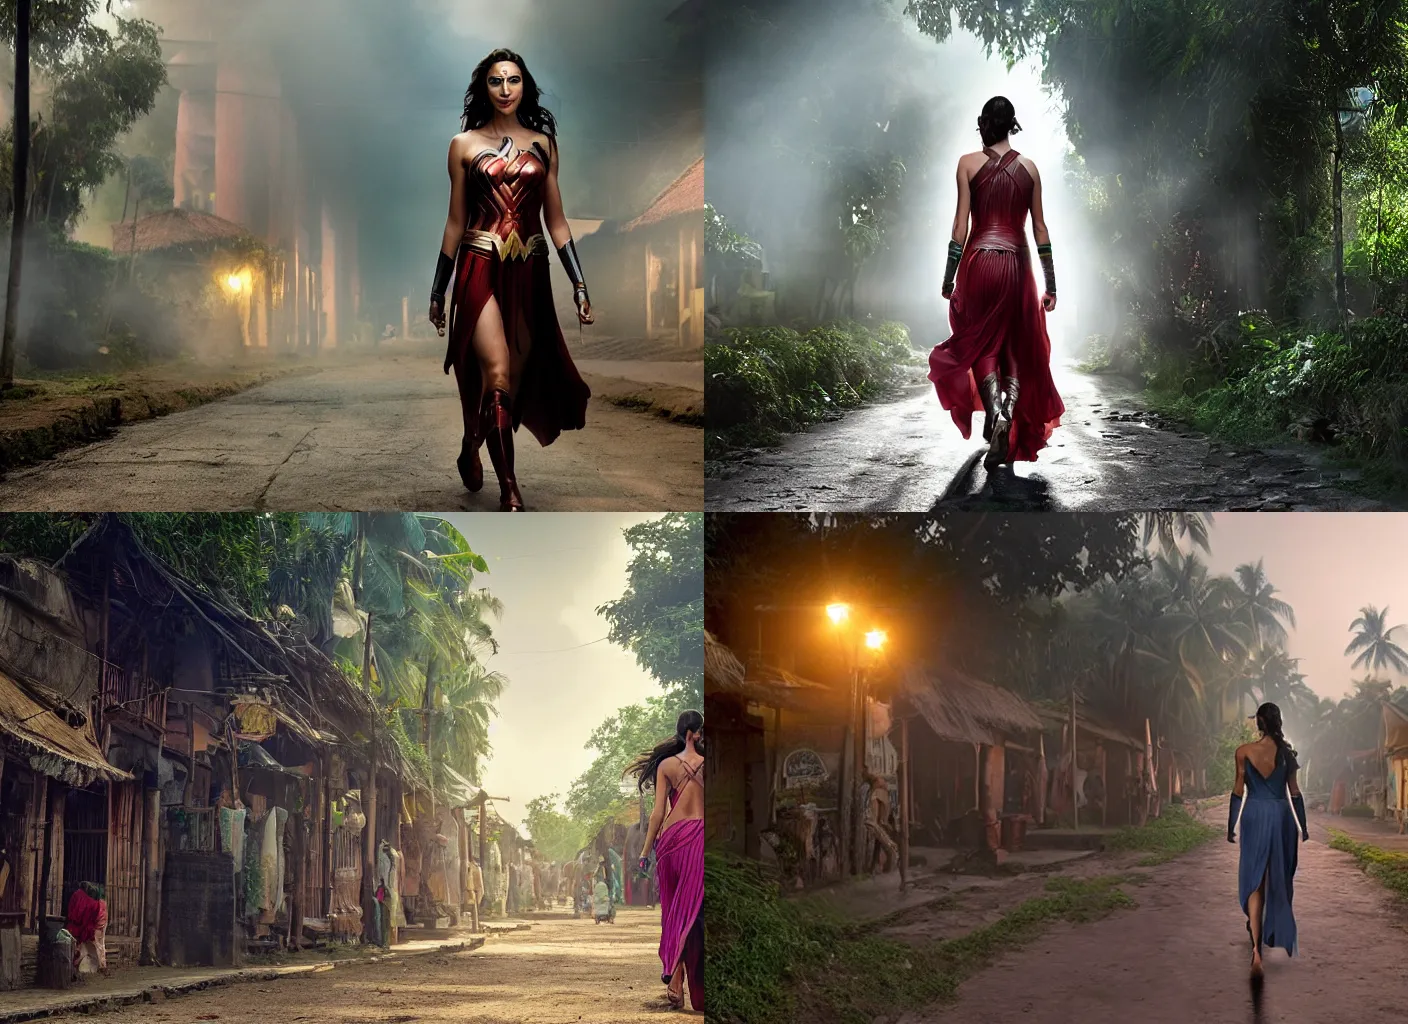 Prompt: gal gadot walking in the steets of a kerala village, cinematic, volumetric lighting, hdr